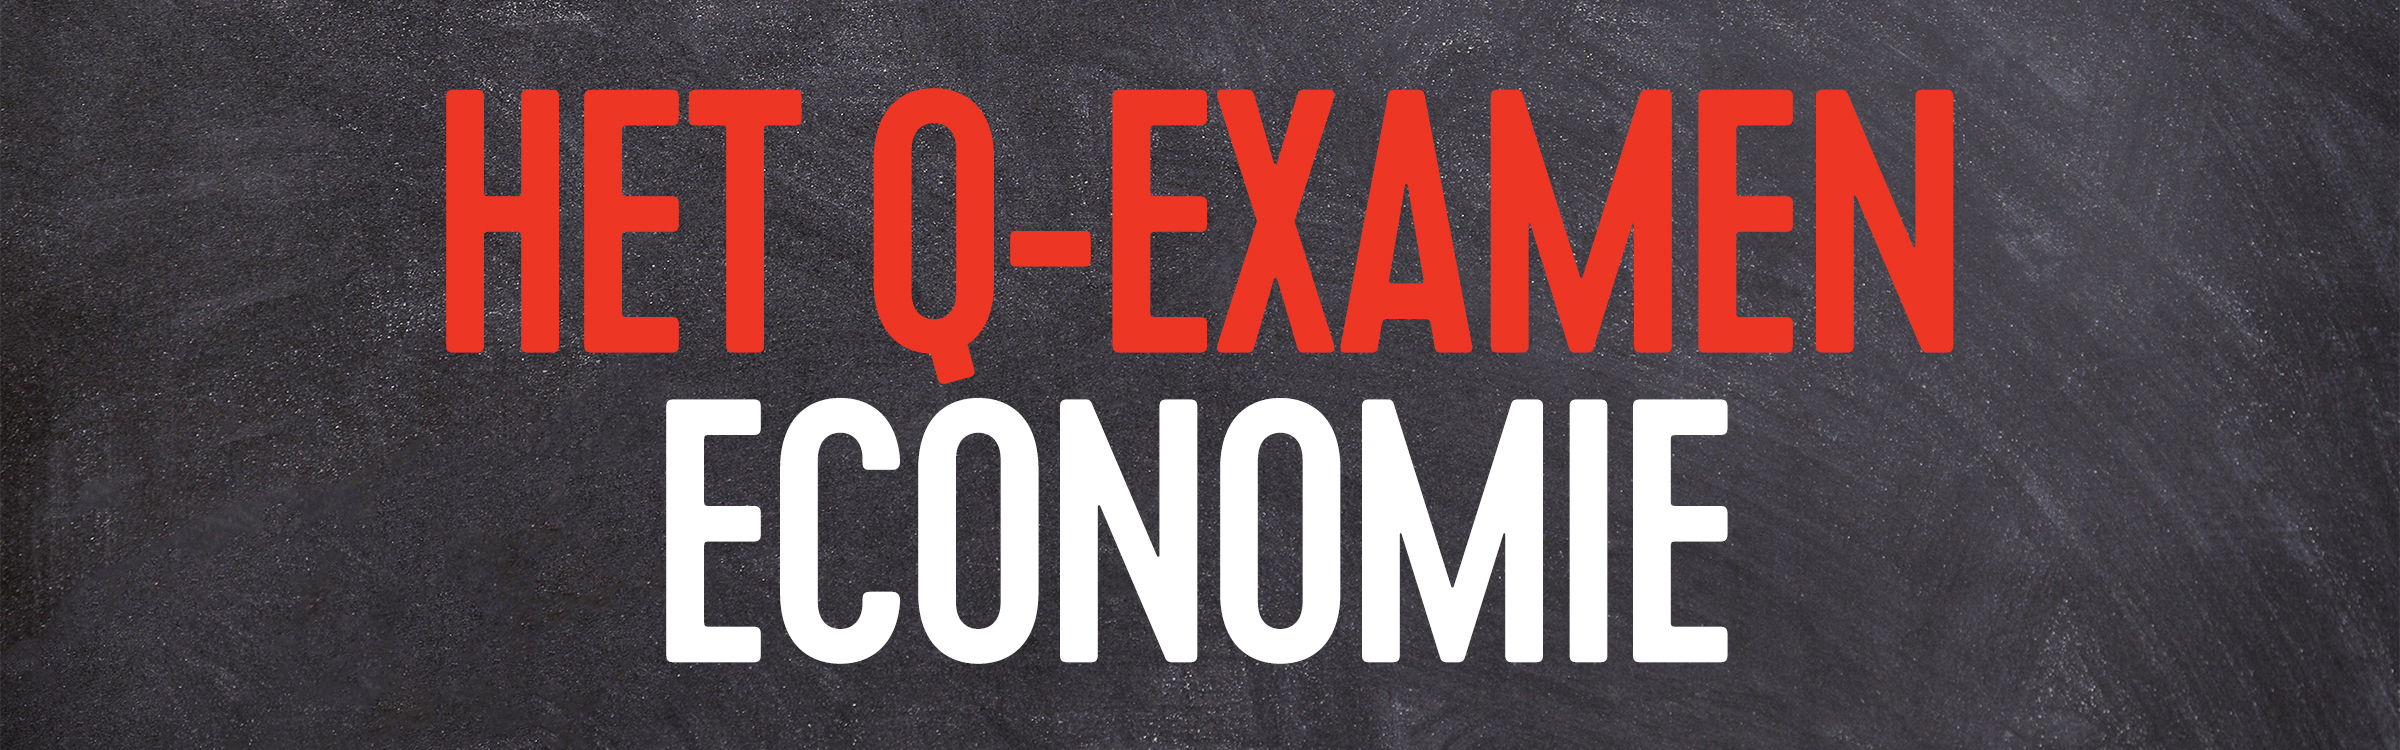 Q examen economie header